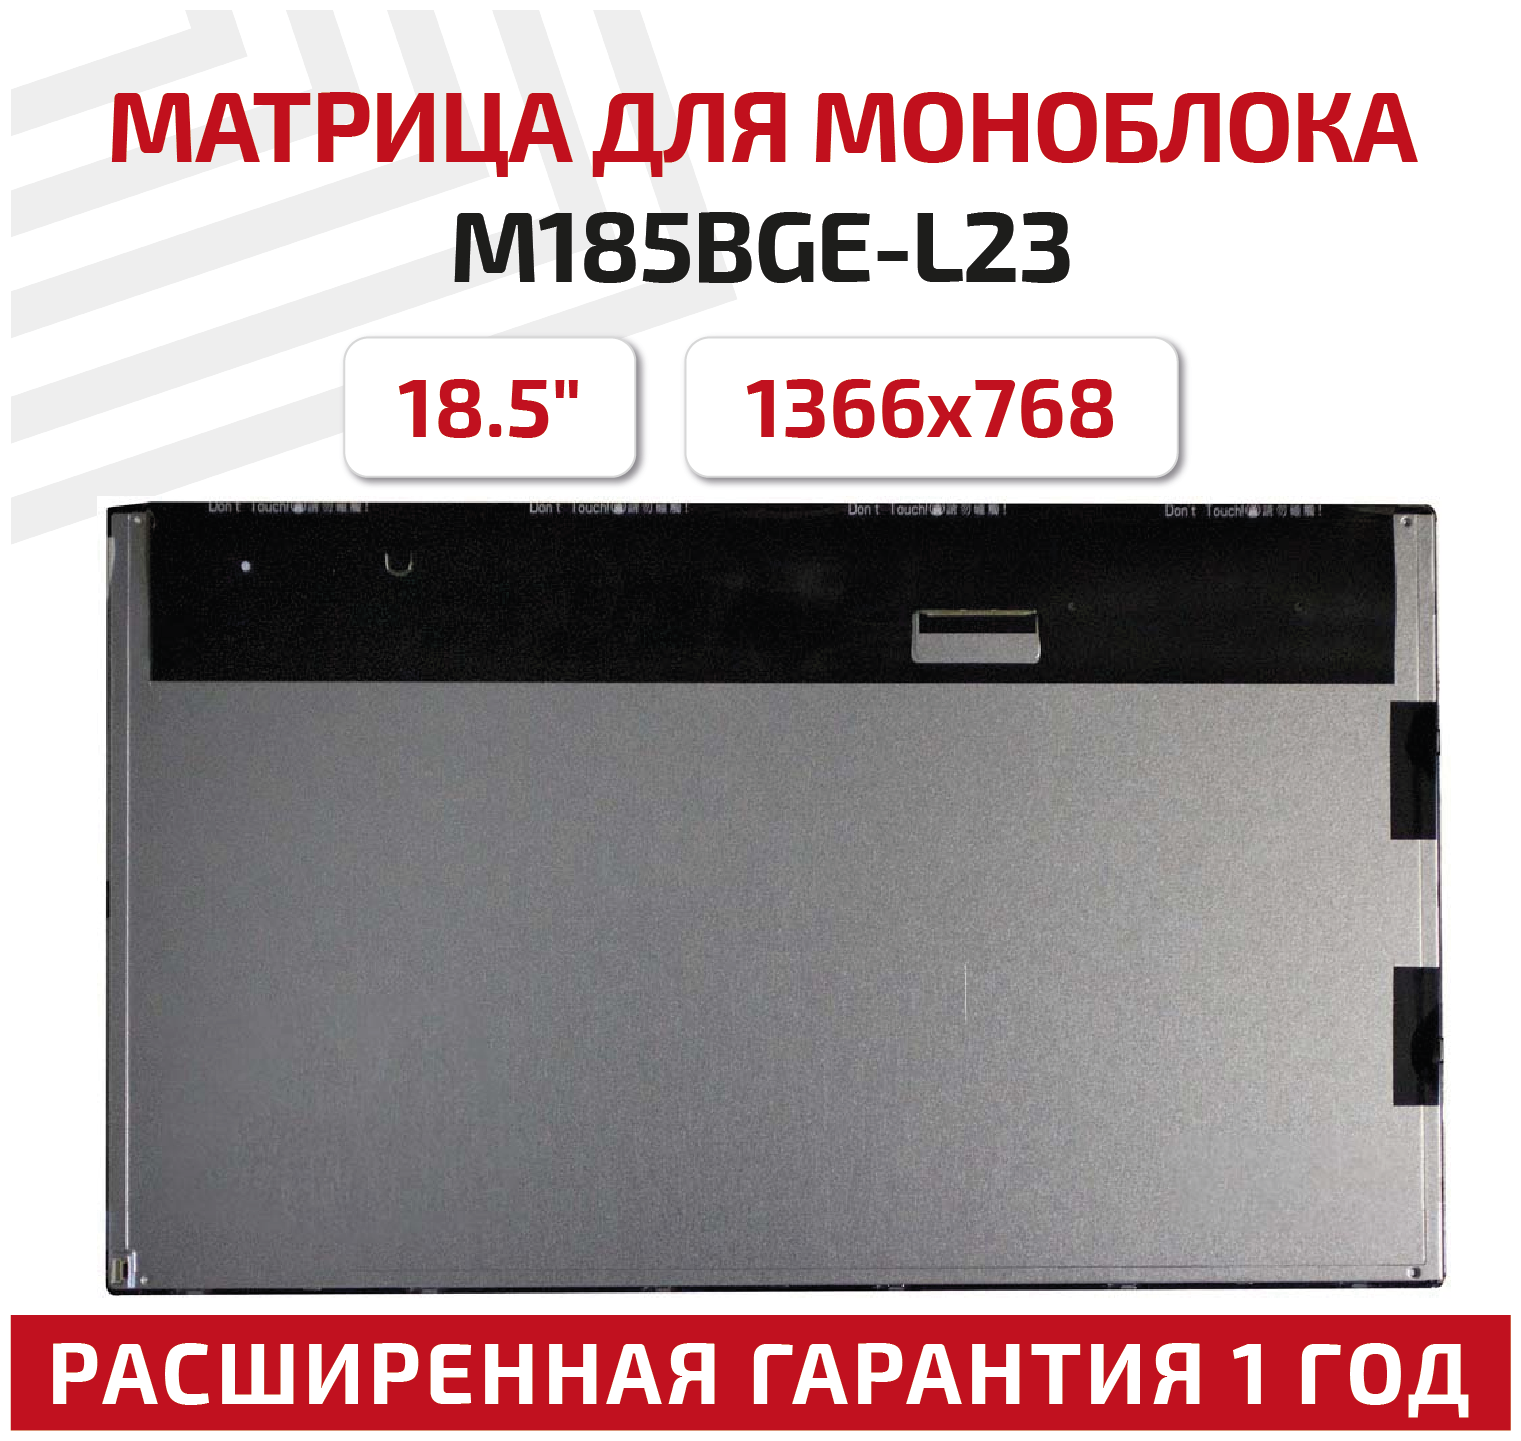 Матрица для моноблока M185BGE-L23 18.5" 1366x768 светодиодная (LED) матовая